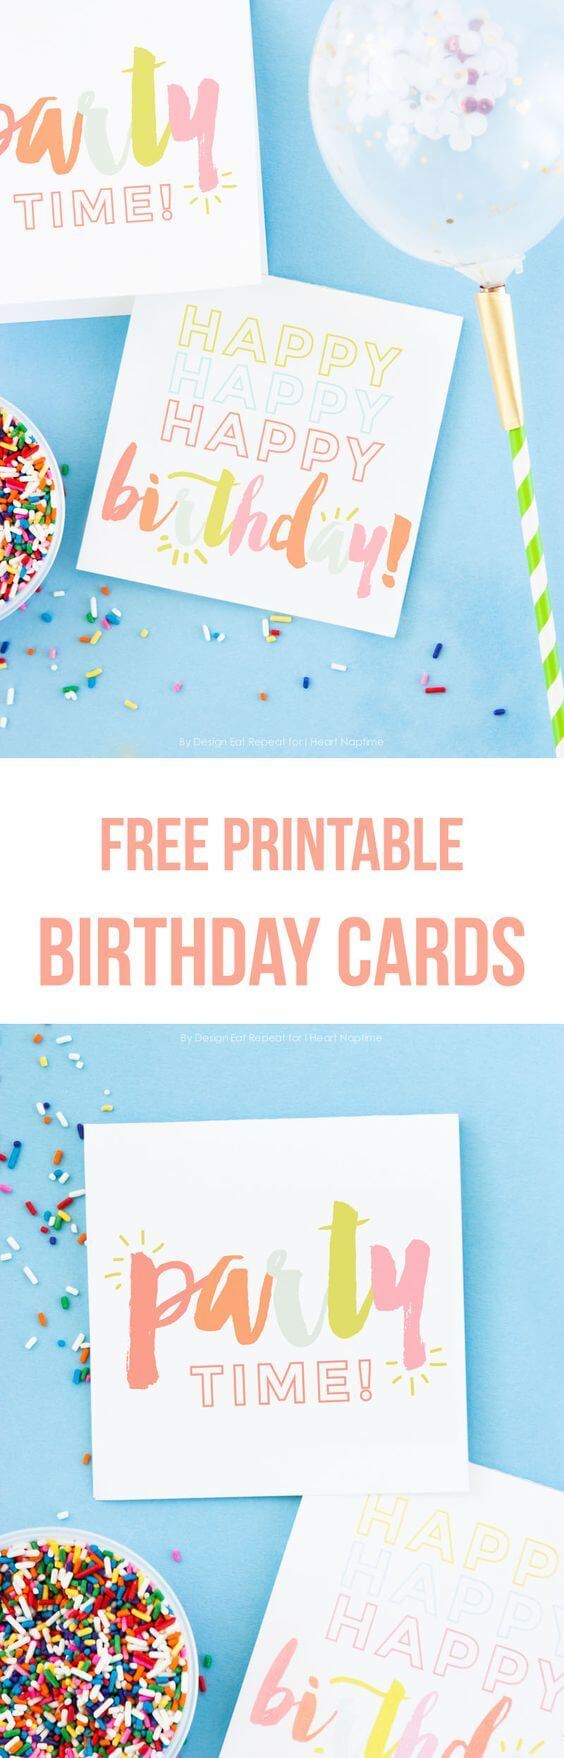 Adorable Free Printable Birthday Cards - I Heart Naptime - Free Printable Bday Cards